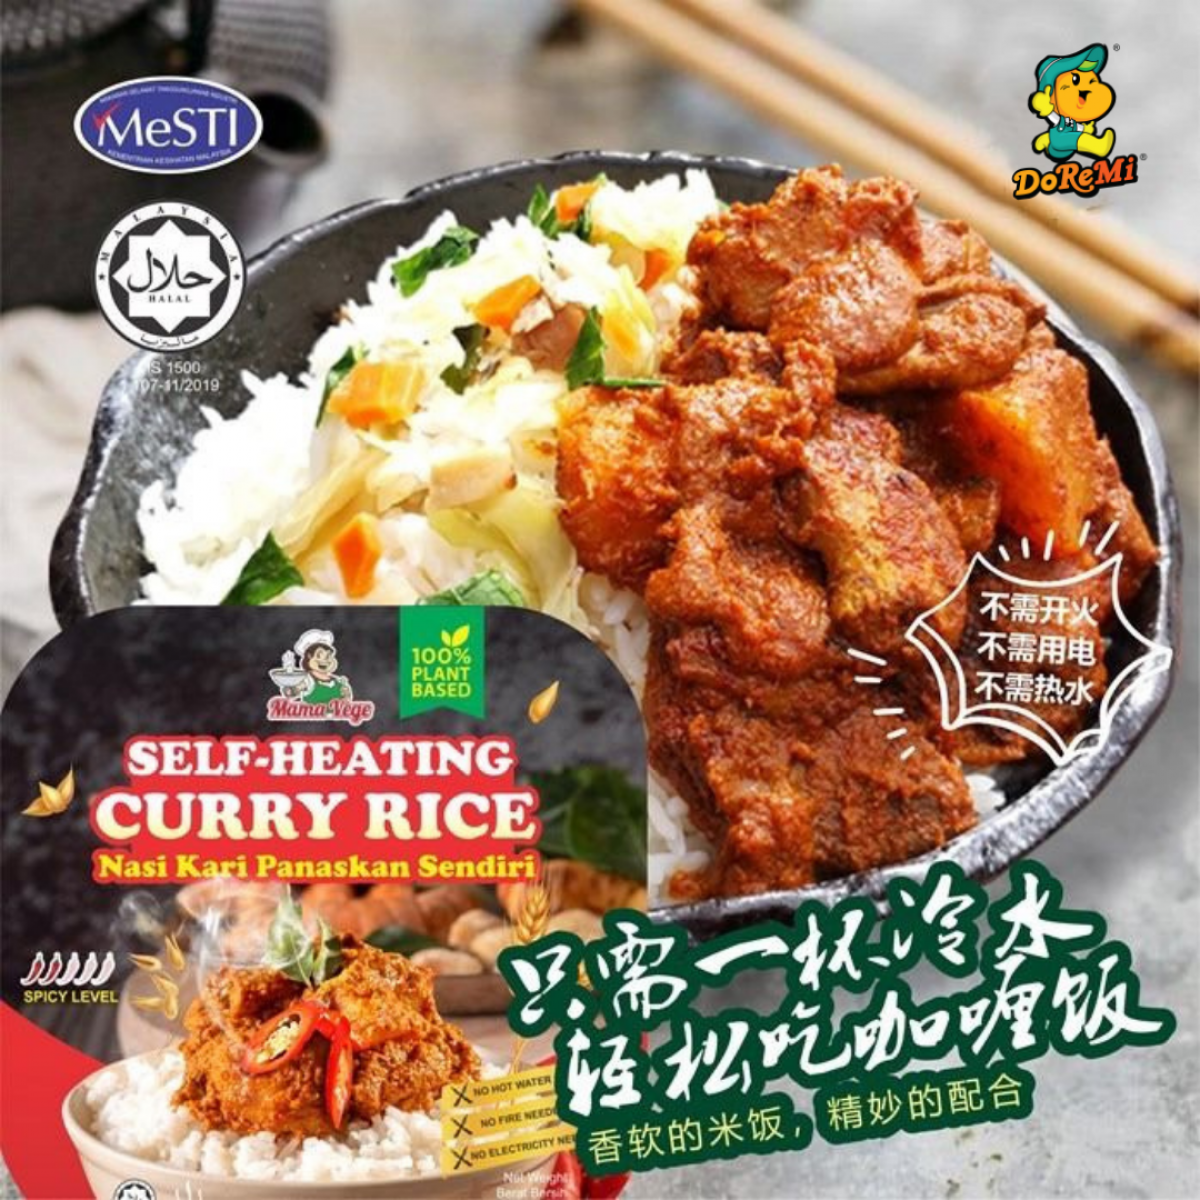 Self-heating Curry Rice (260g)